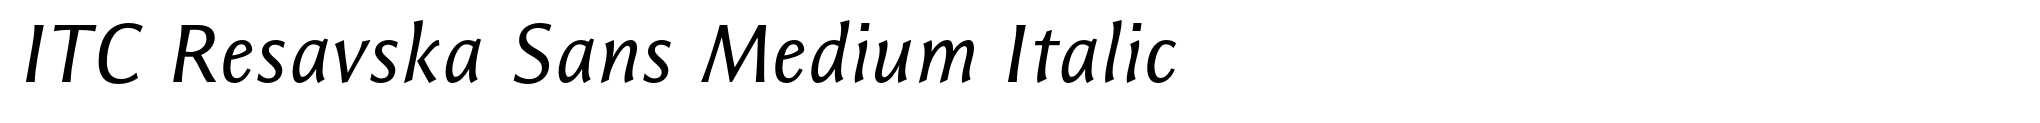 ITC Resavska Sans Medium Italic image